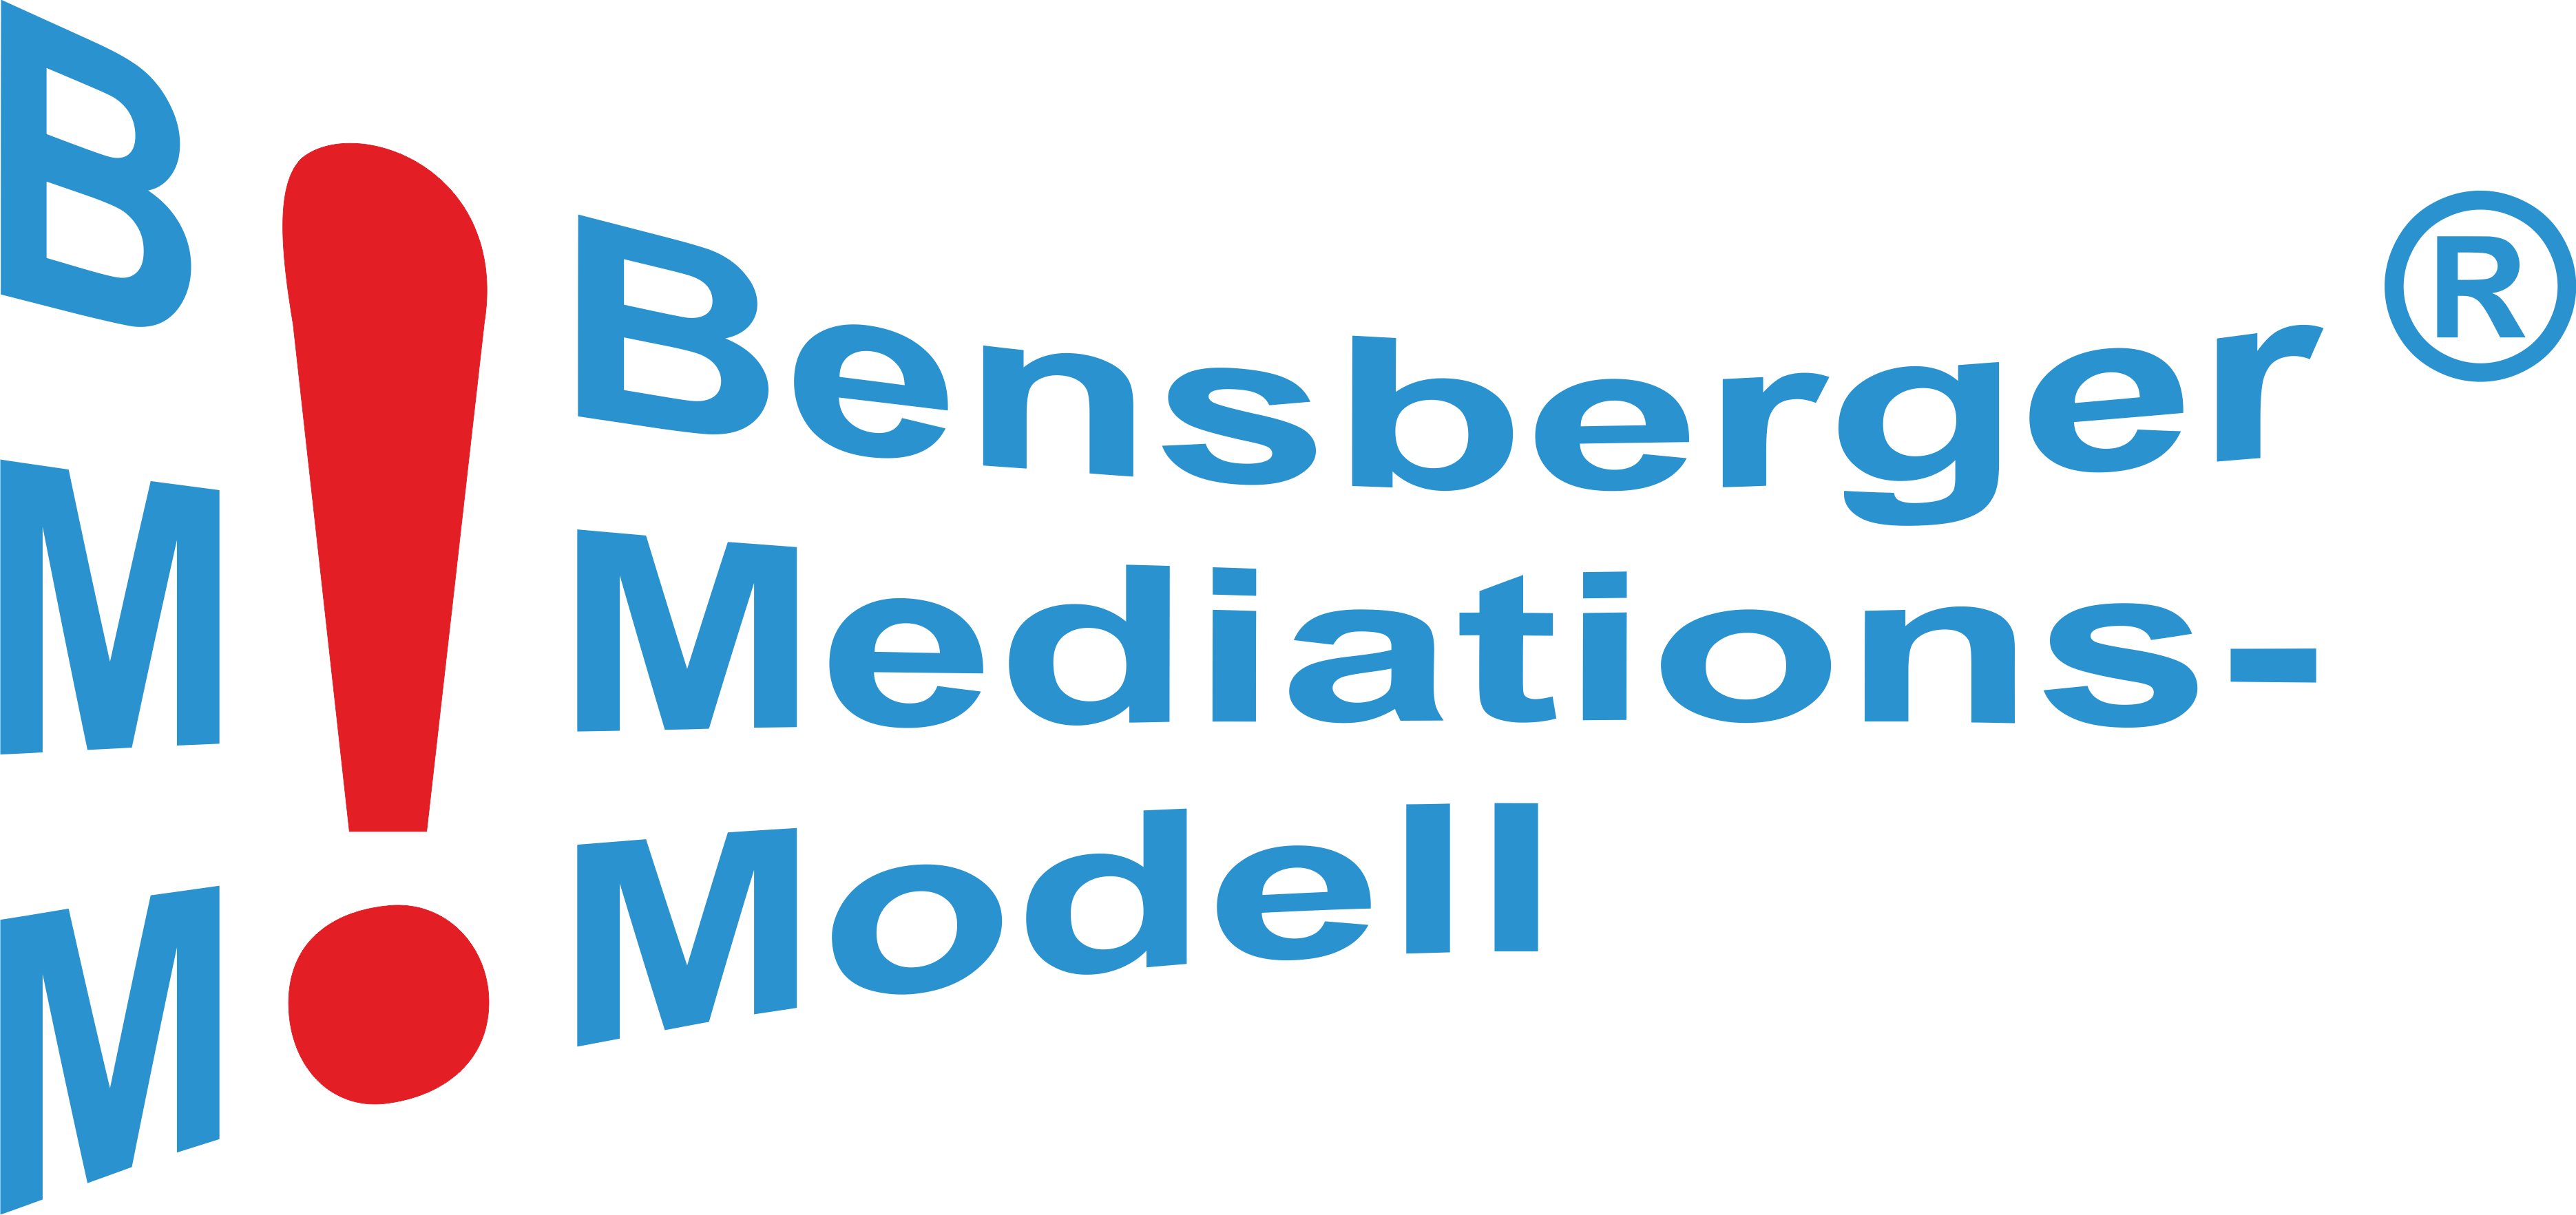 Das Bensberger Mediationsmodell